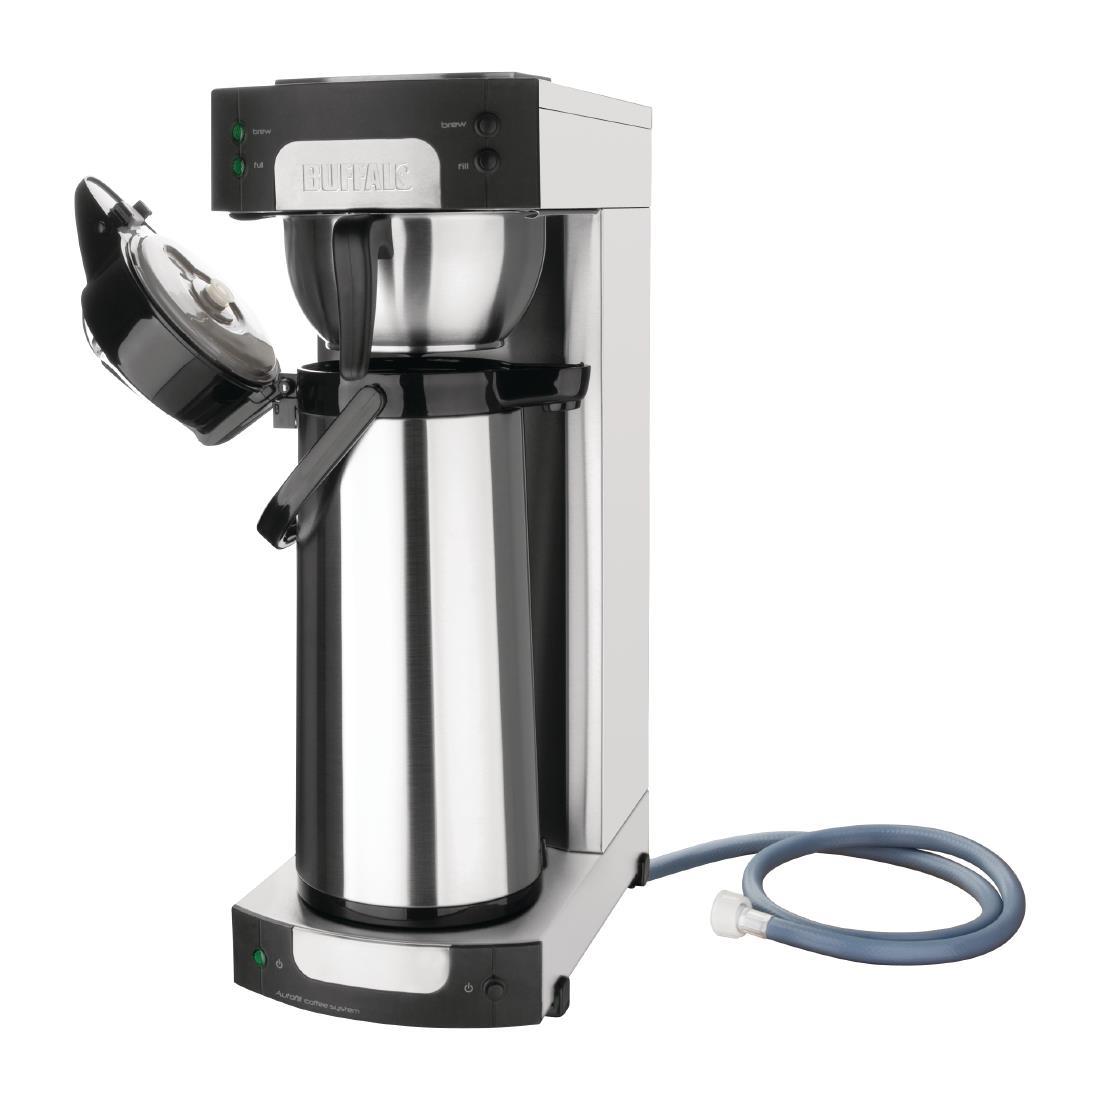 Buffalo Airpot Filter Coffee Maker - CW306  - 8